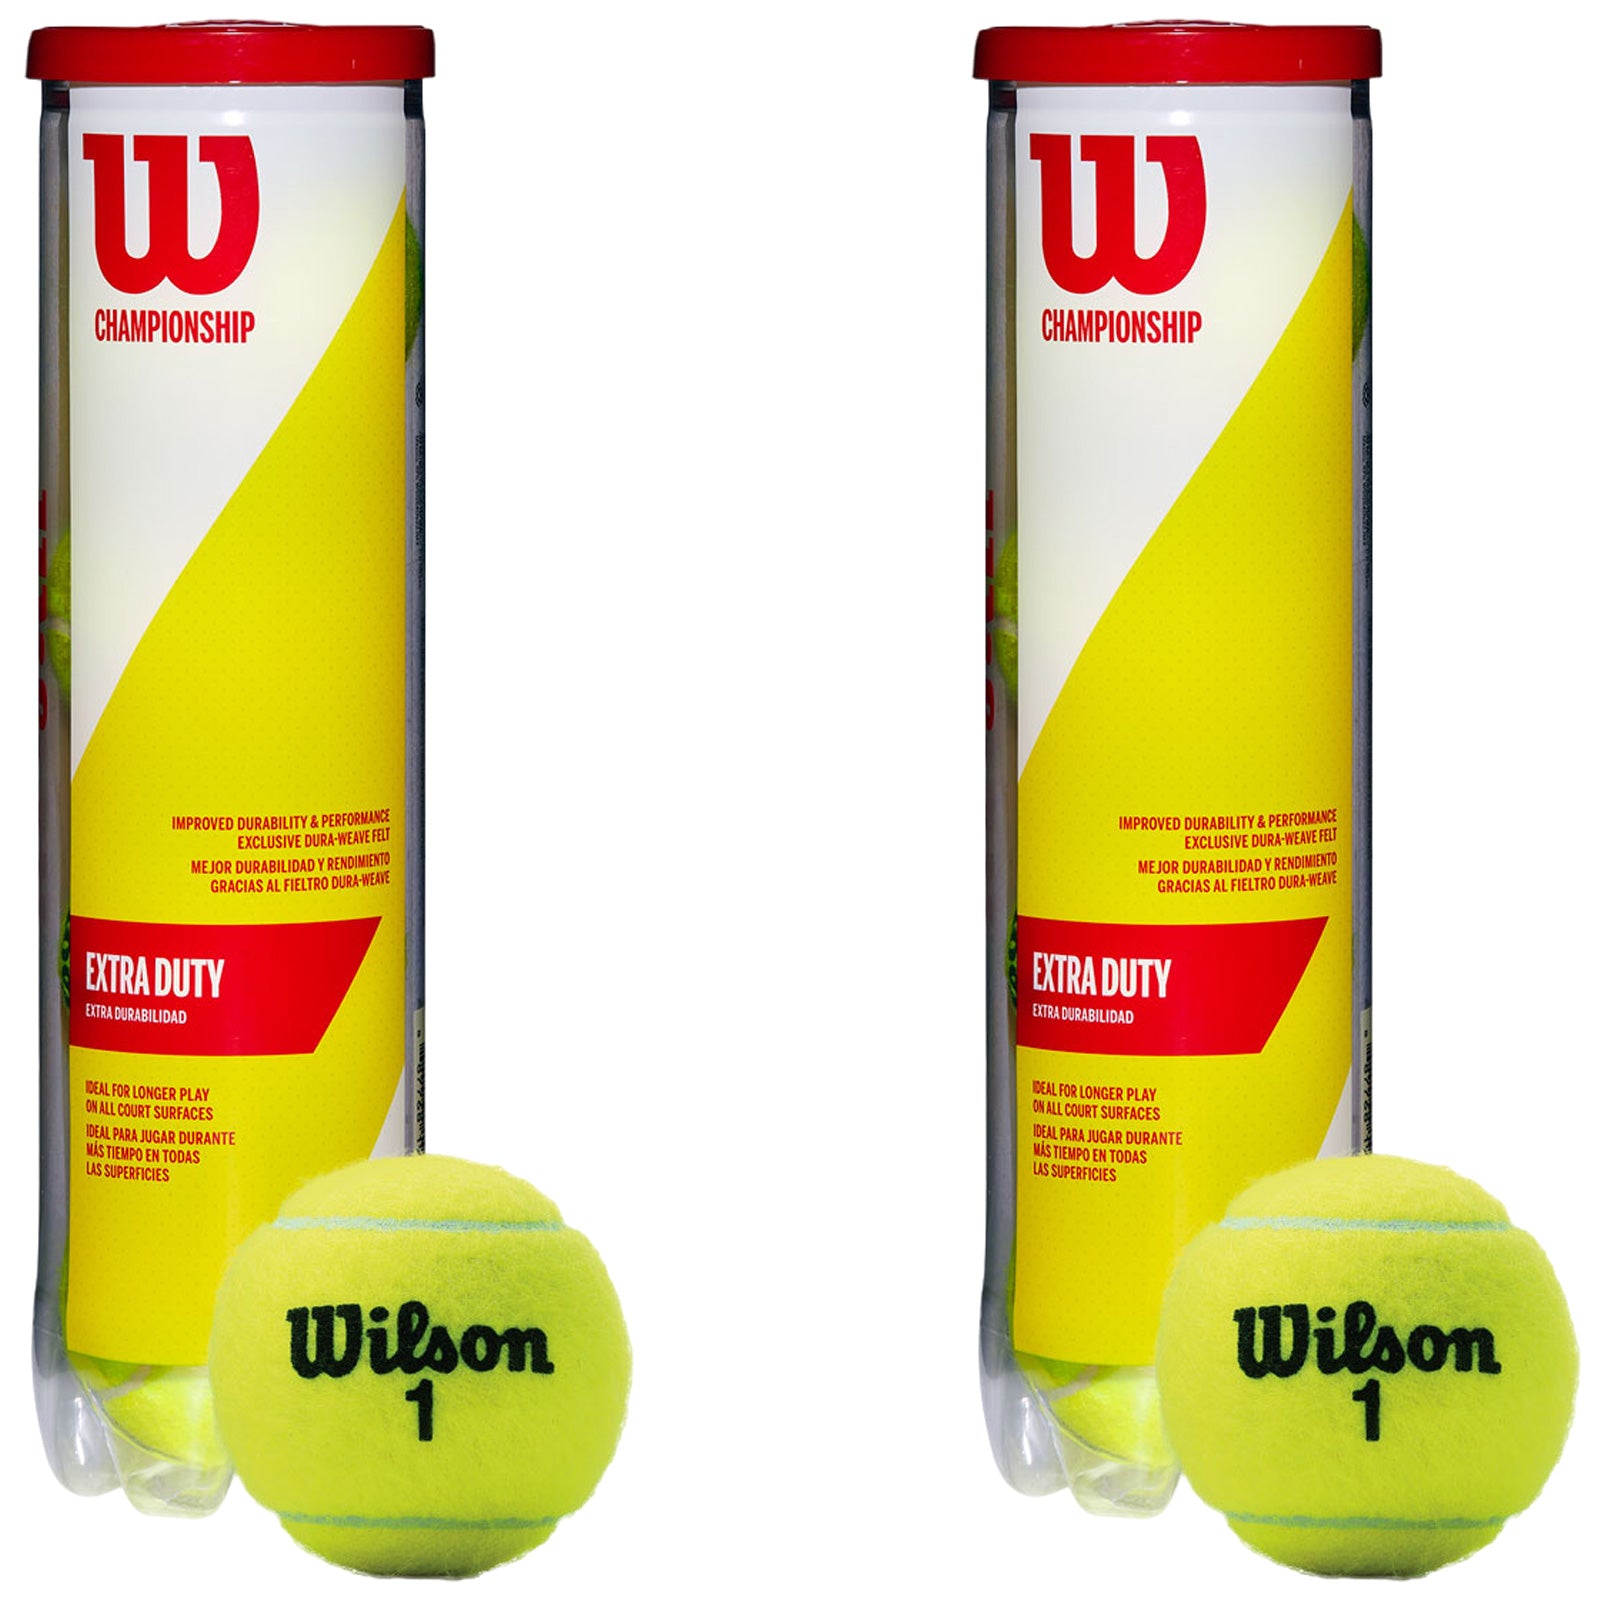 Wilson Championship Extra Duty Tennis Balls